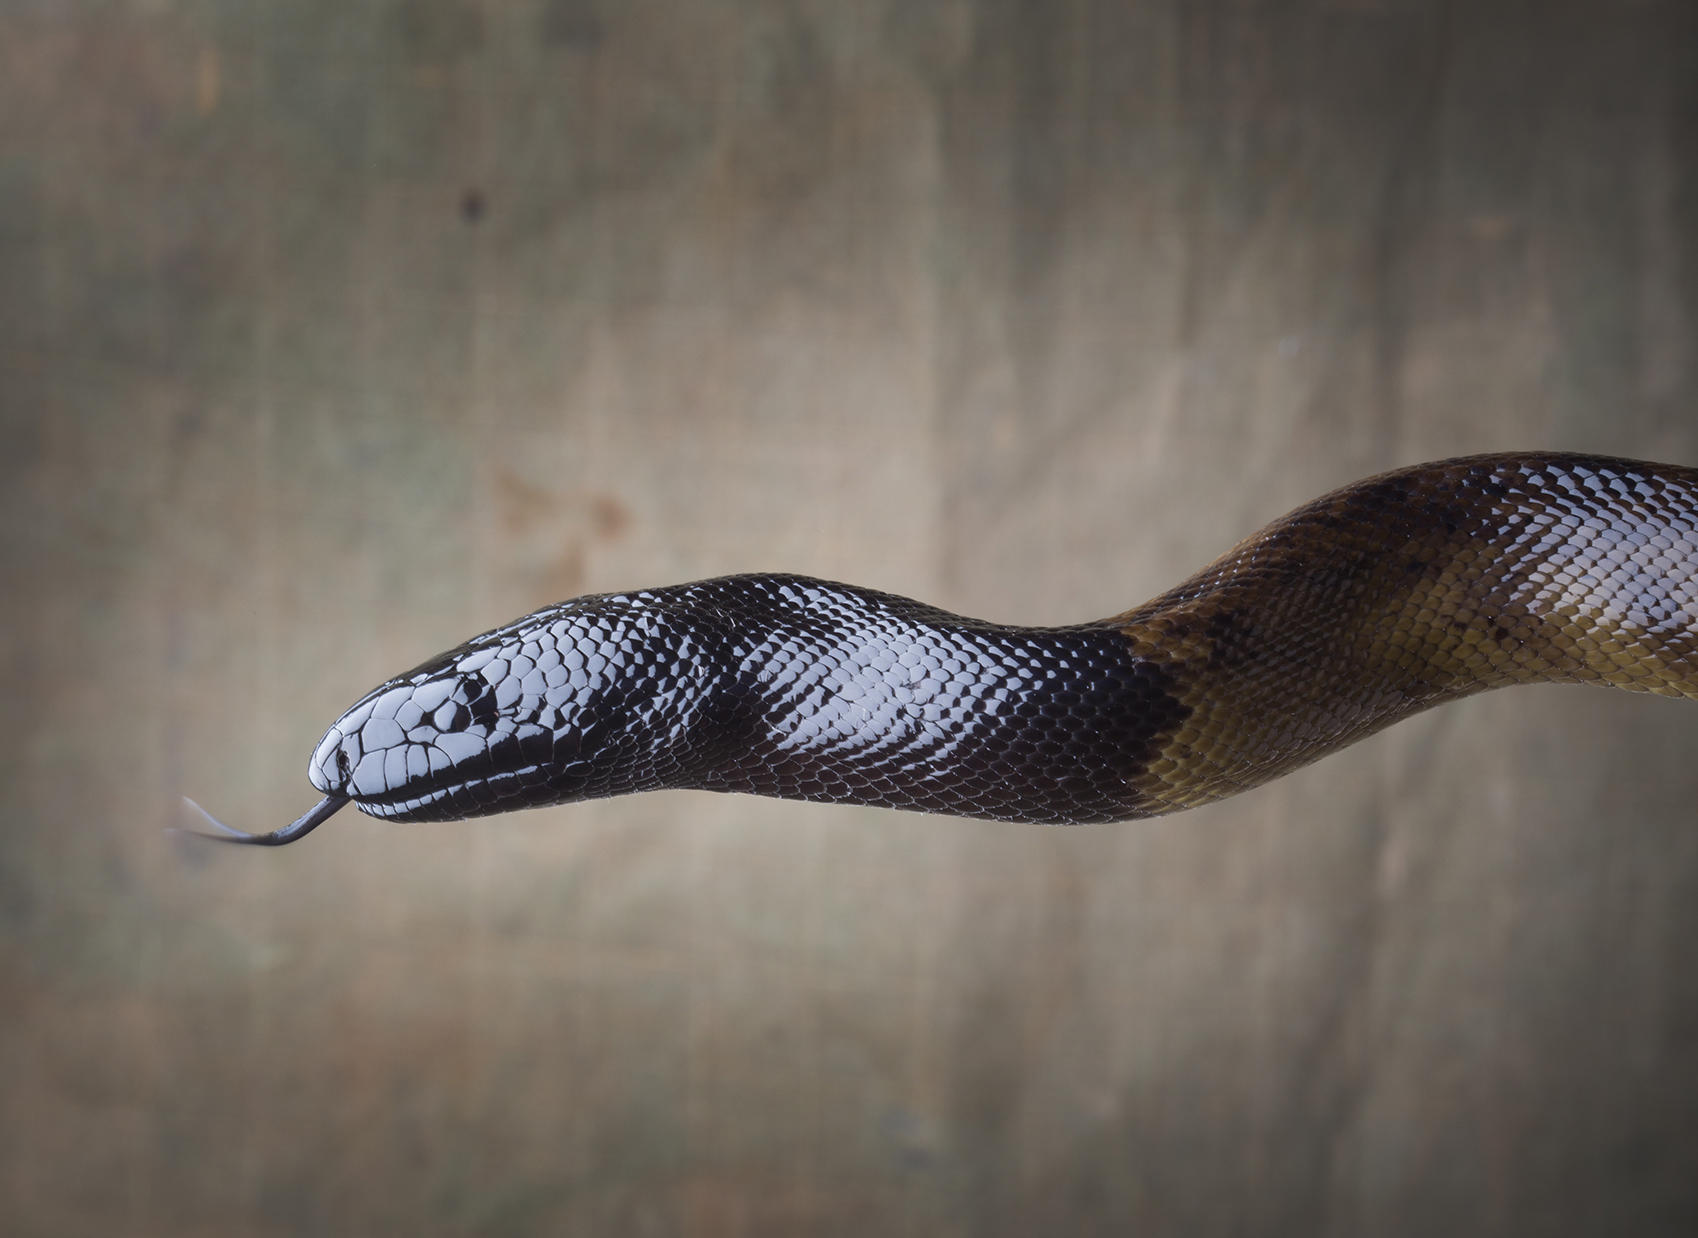  Black Headed Python,  Steve Irwin Wildlife Reserve, Cape York, Australia.  © Russell Shakespeare/Australia Zoo 